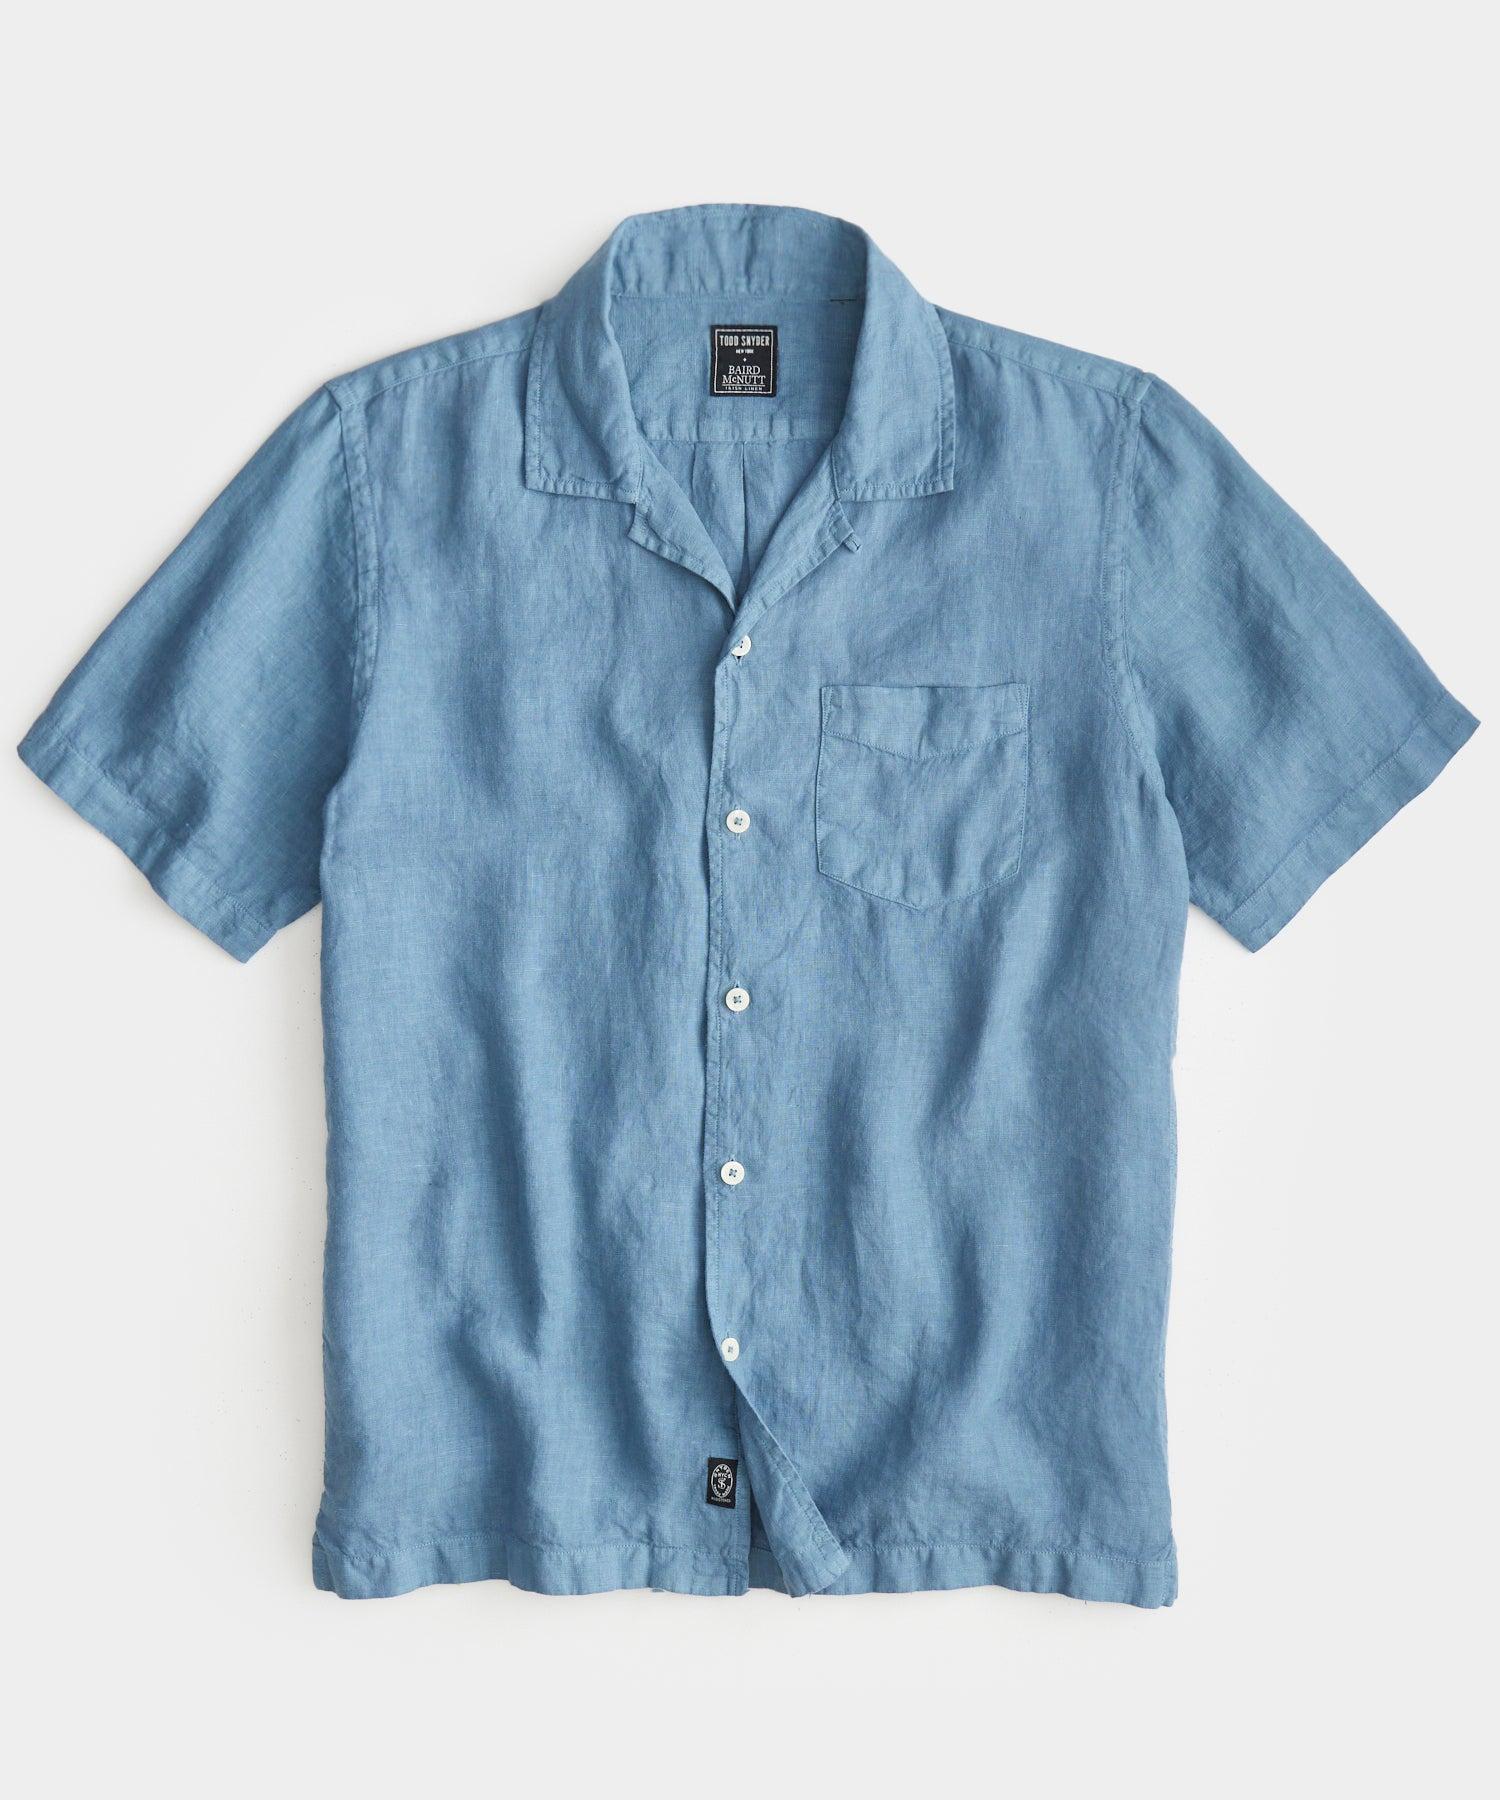 Todd Snyder Sea Soft Linen Camp Collar Shirt in Blue for Men